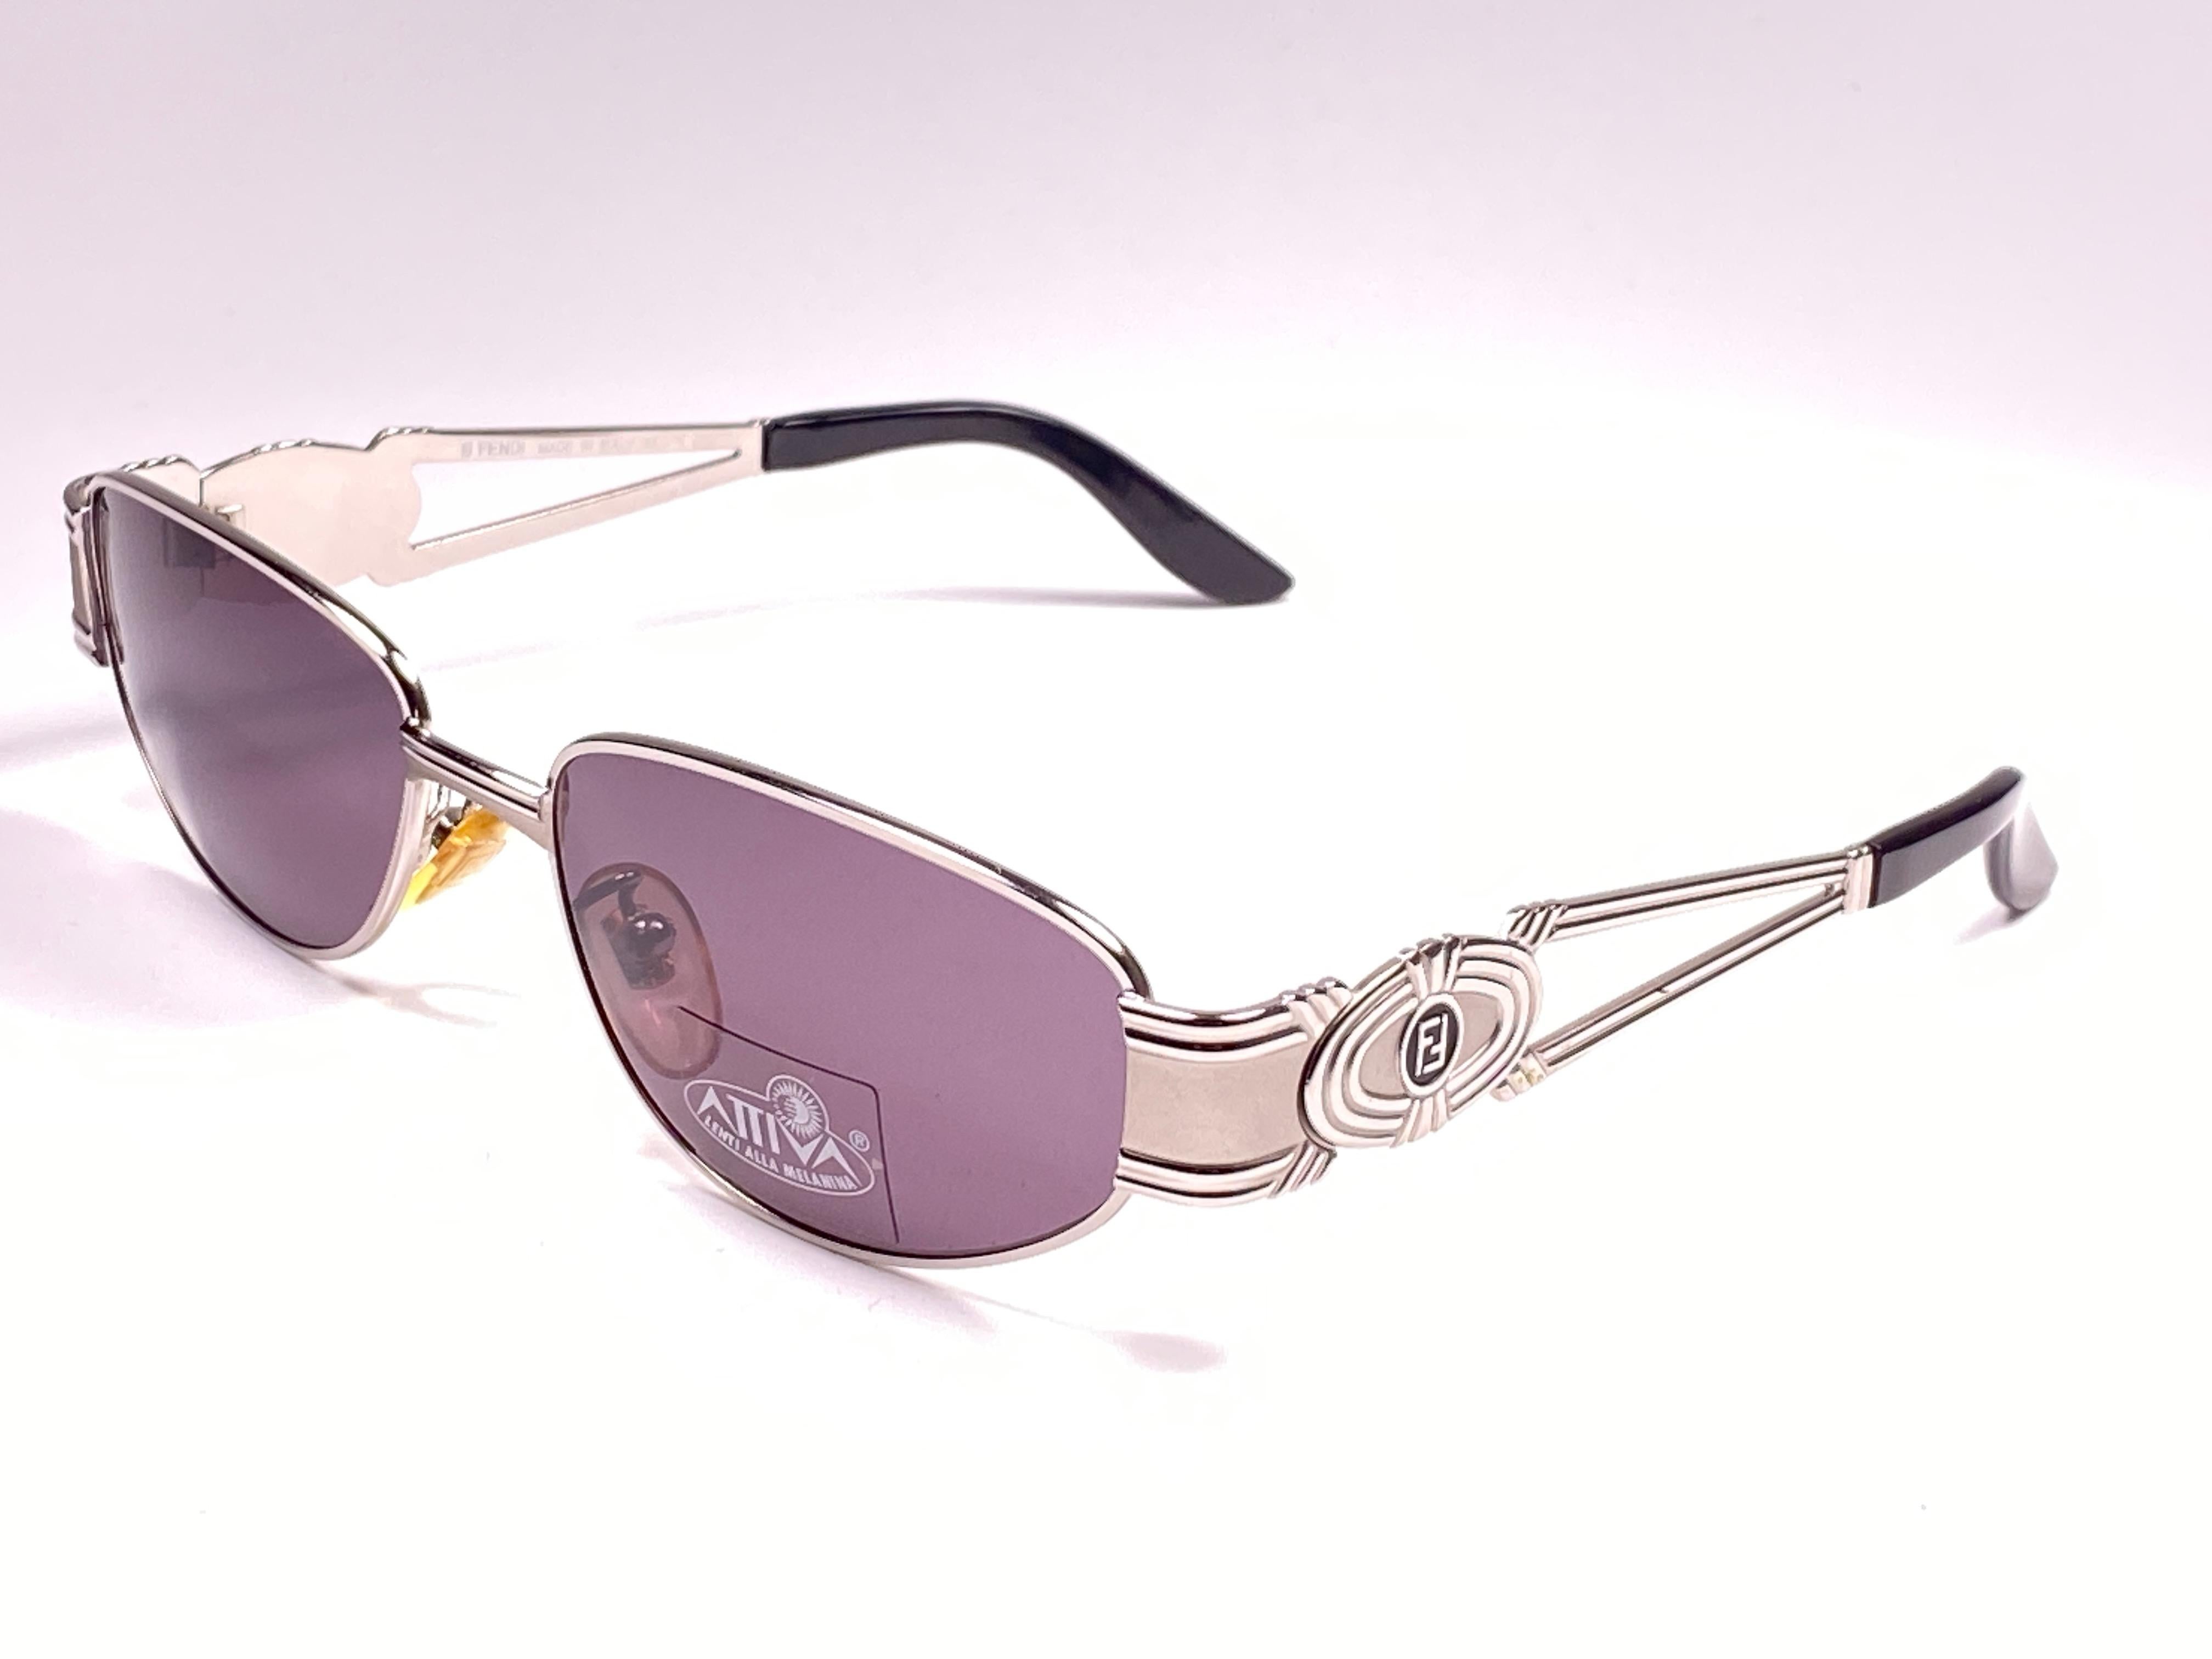 fendi sunglasses made in italy